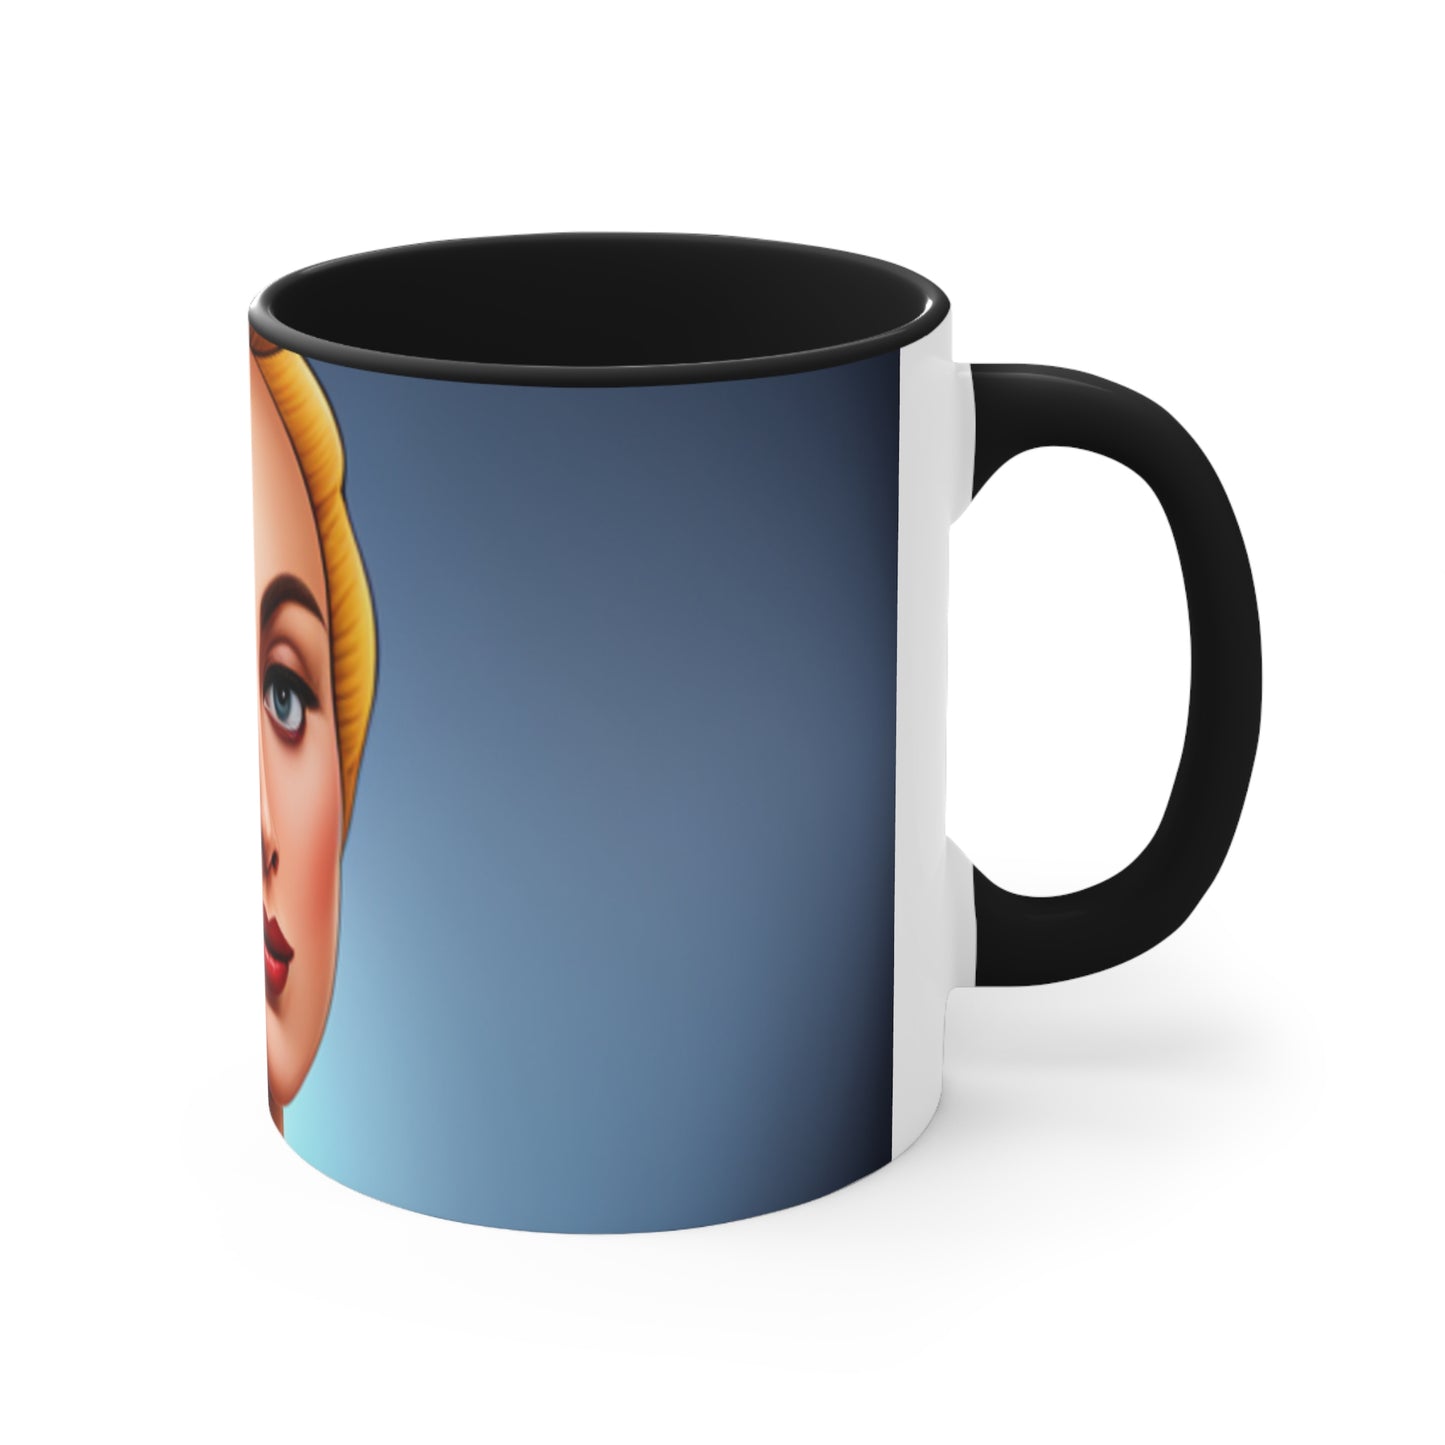 Basic Bish Accent Coffee Mug, 11oz